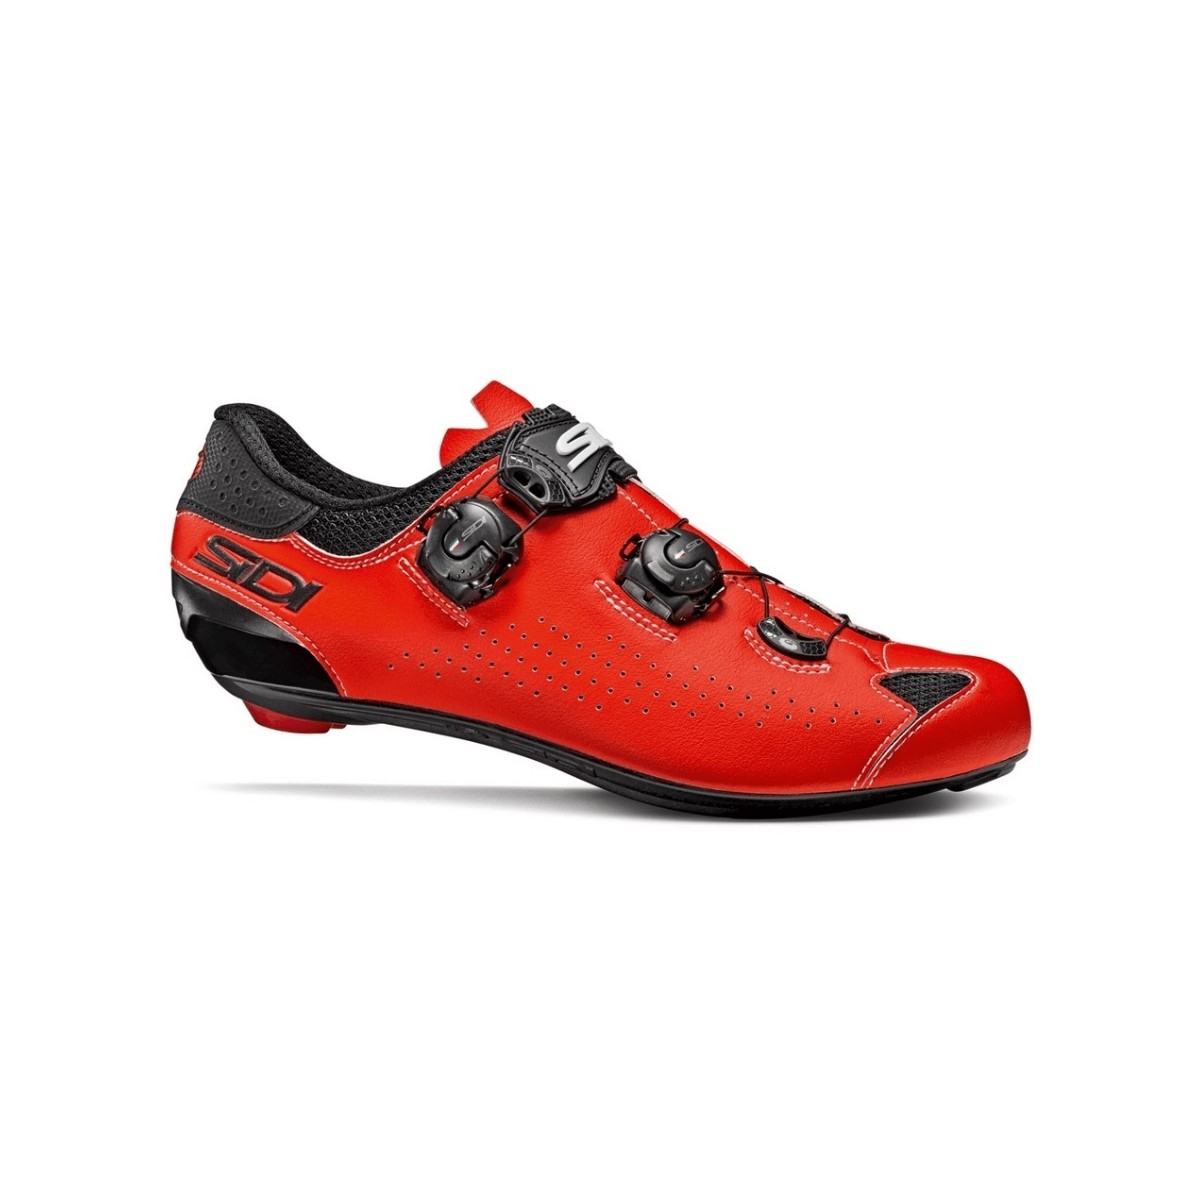 Sidi Genius 10 Cycling Shoes Red Black, Size 41 - EUR